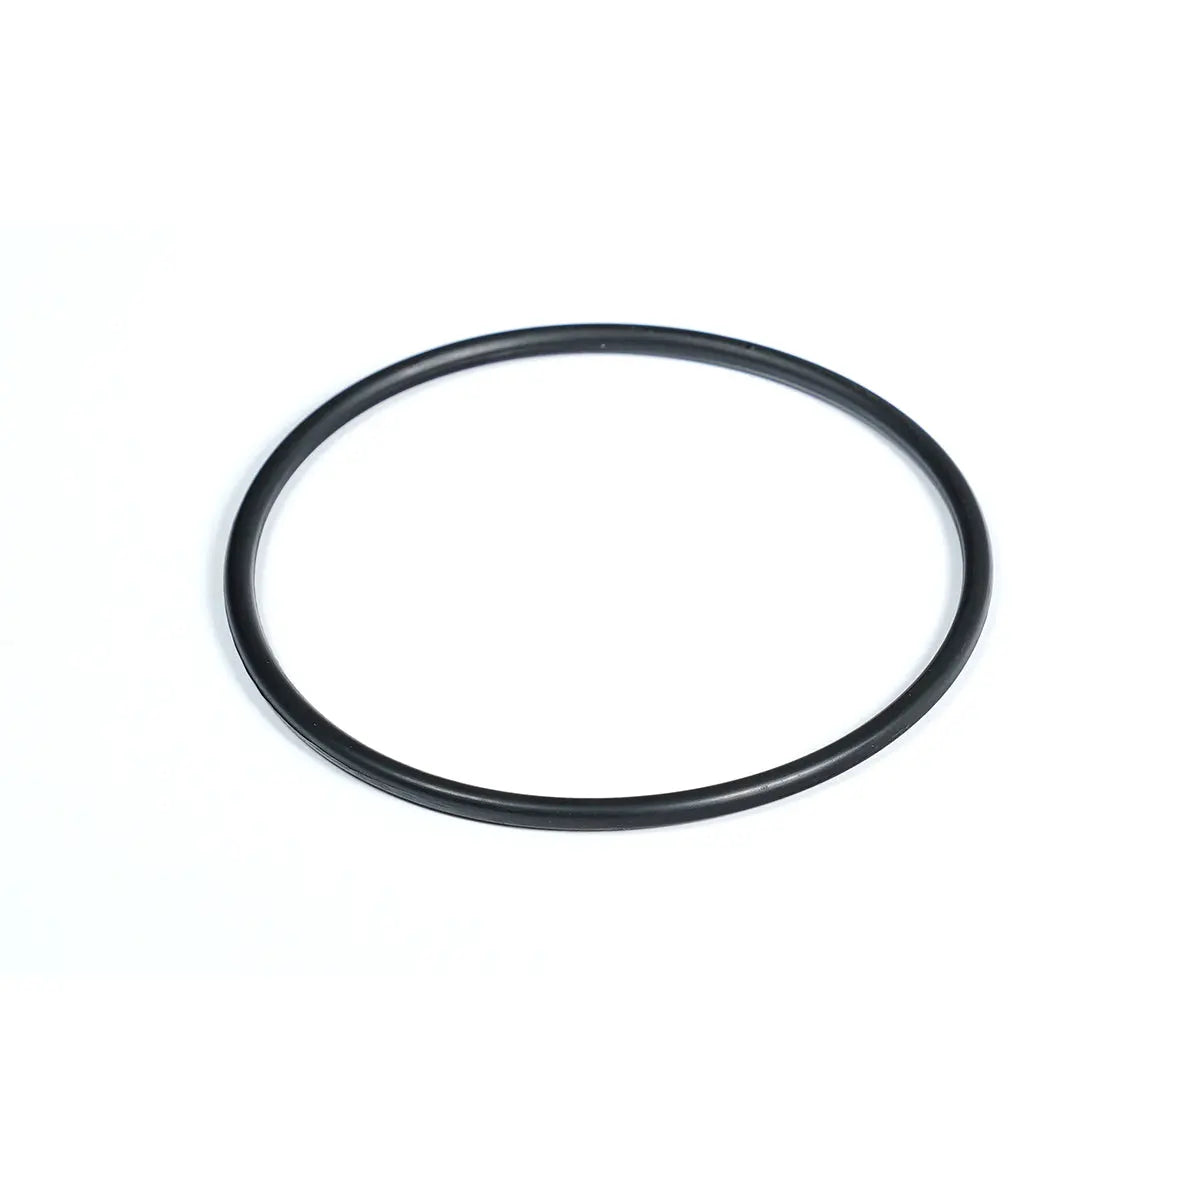 O-ring for PPE Centrifuge Cover Nut